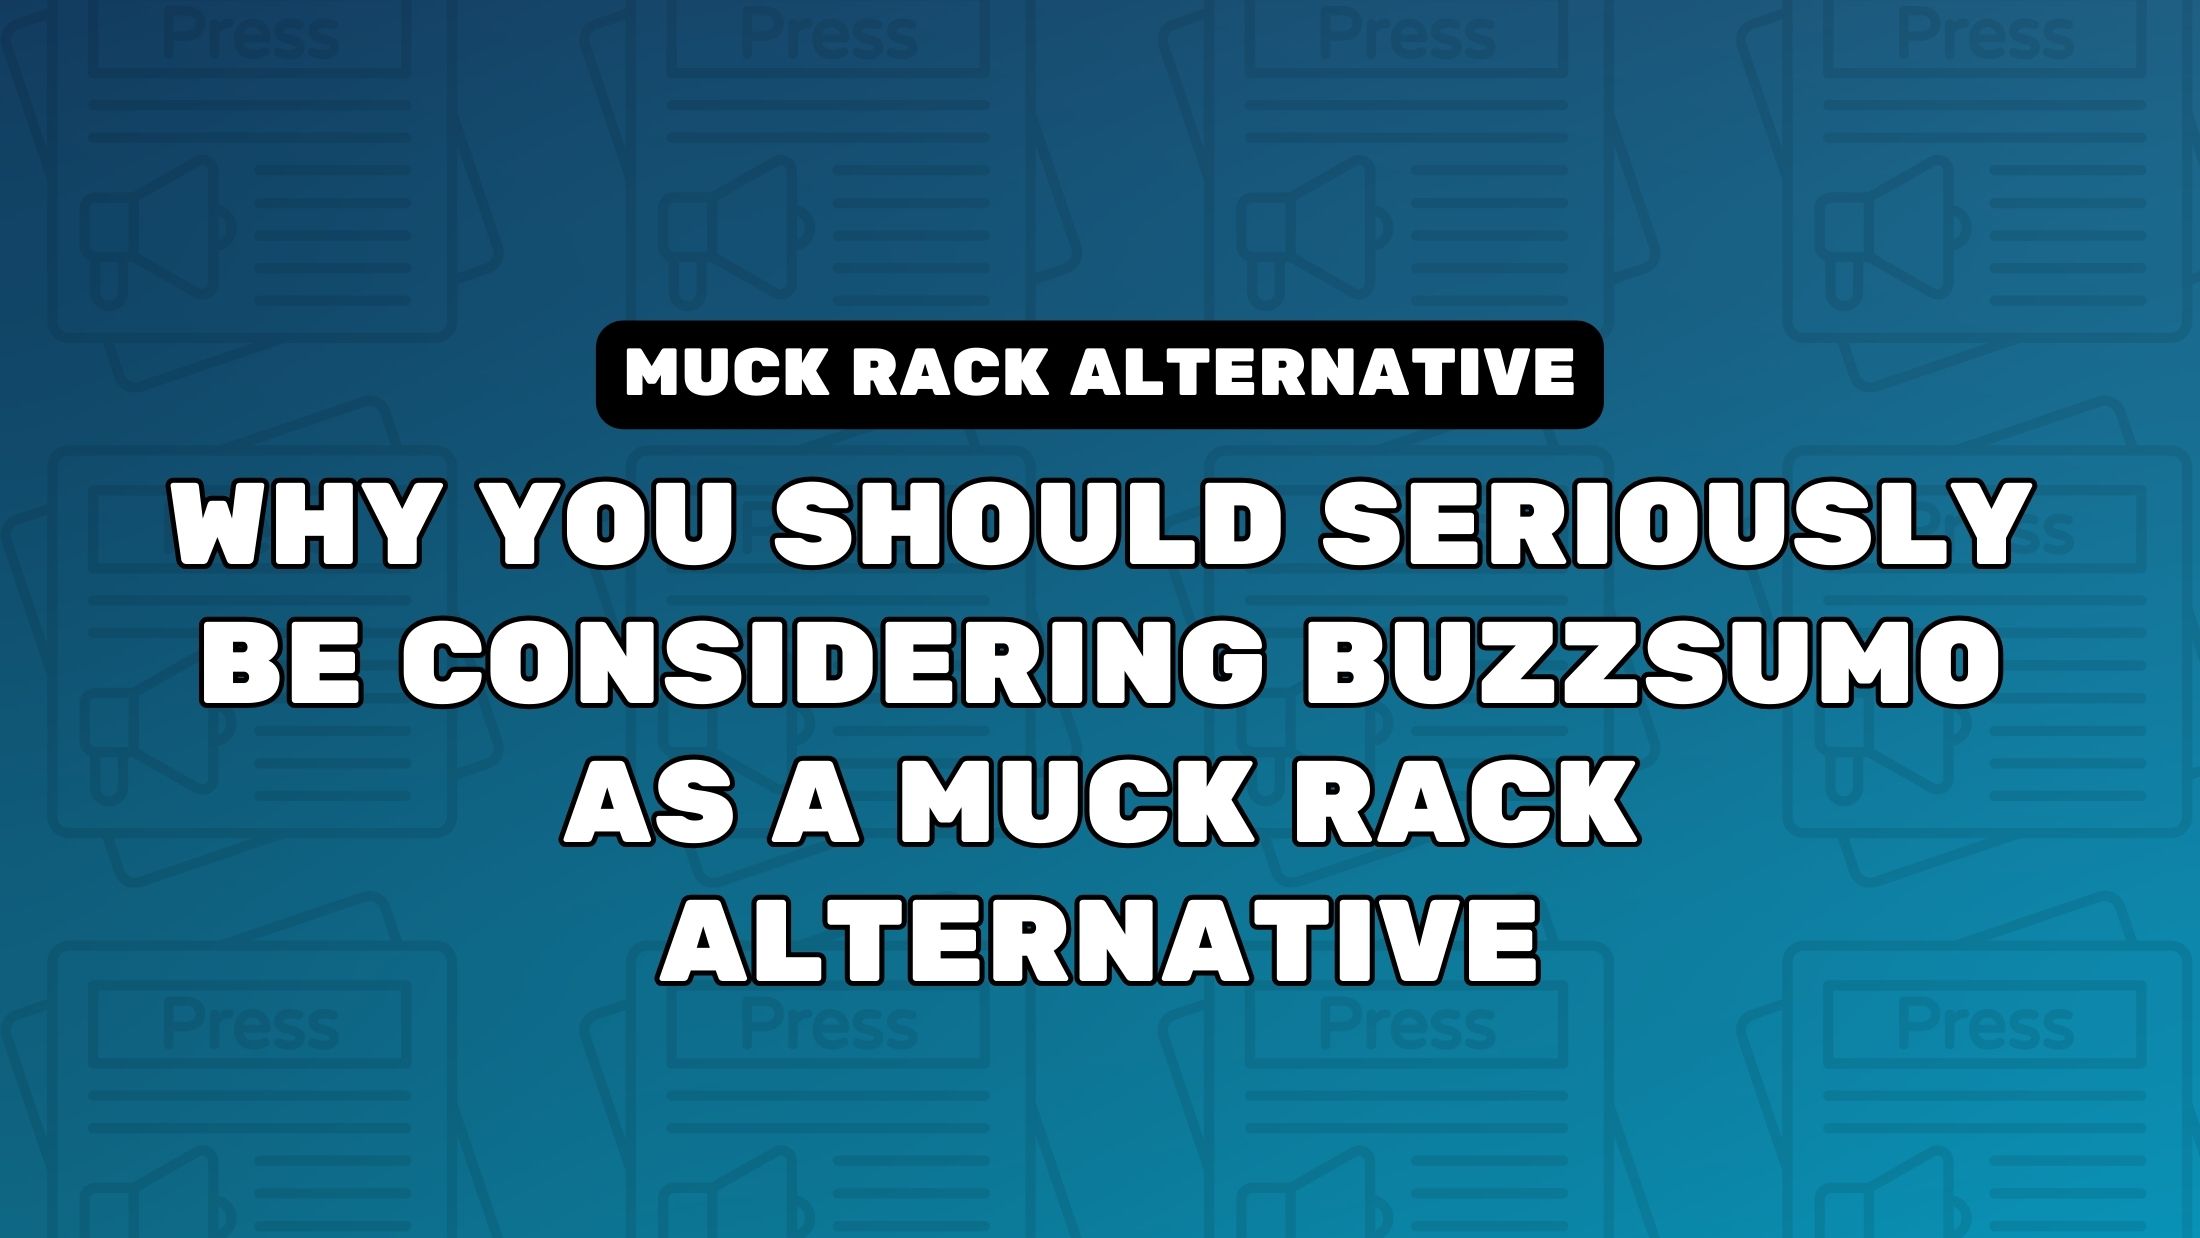 BuzzSumo Muck Rack Alternative Masthead Image